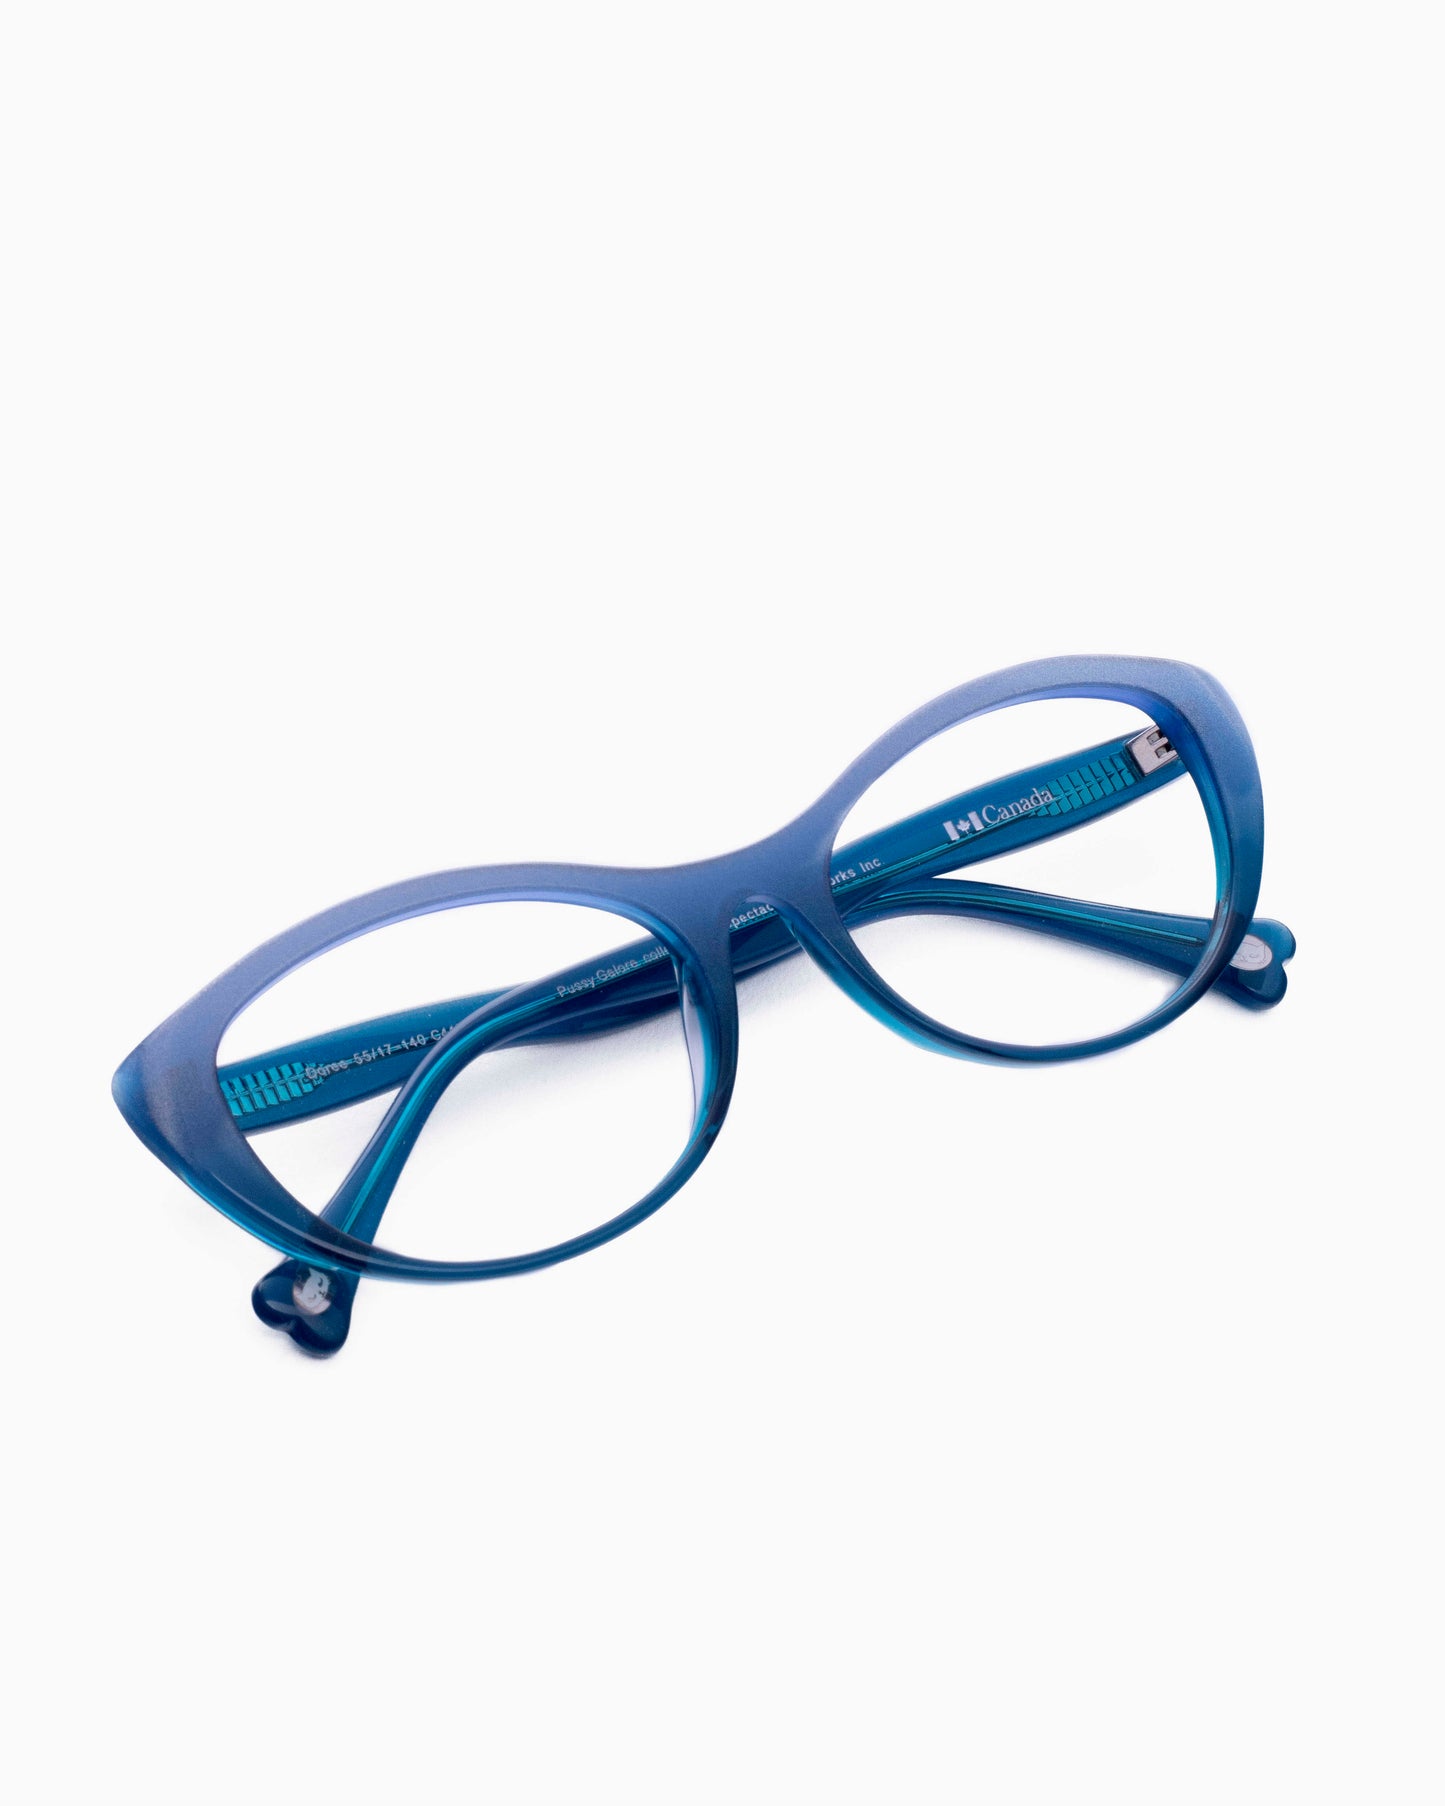 Spectacleeyeworks - Doree - C442 | Bar à lunettes